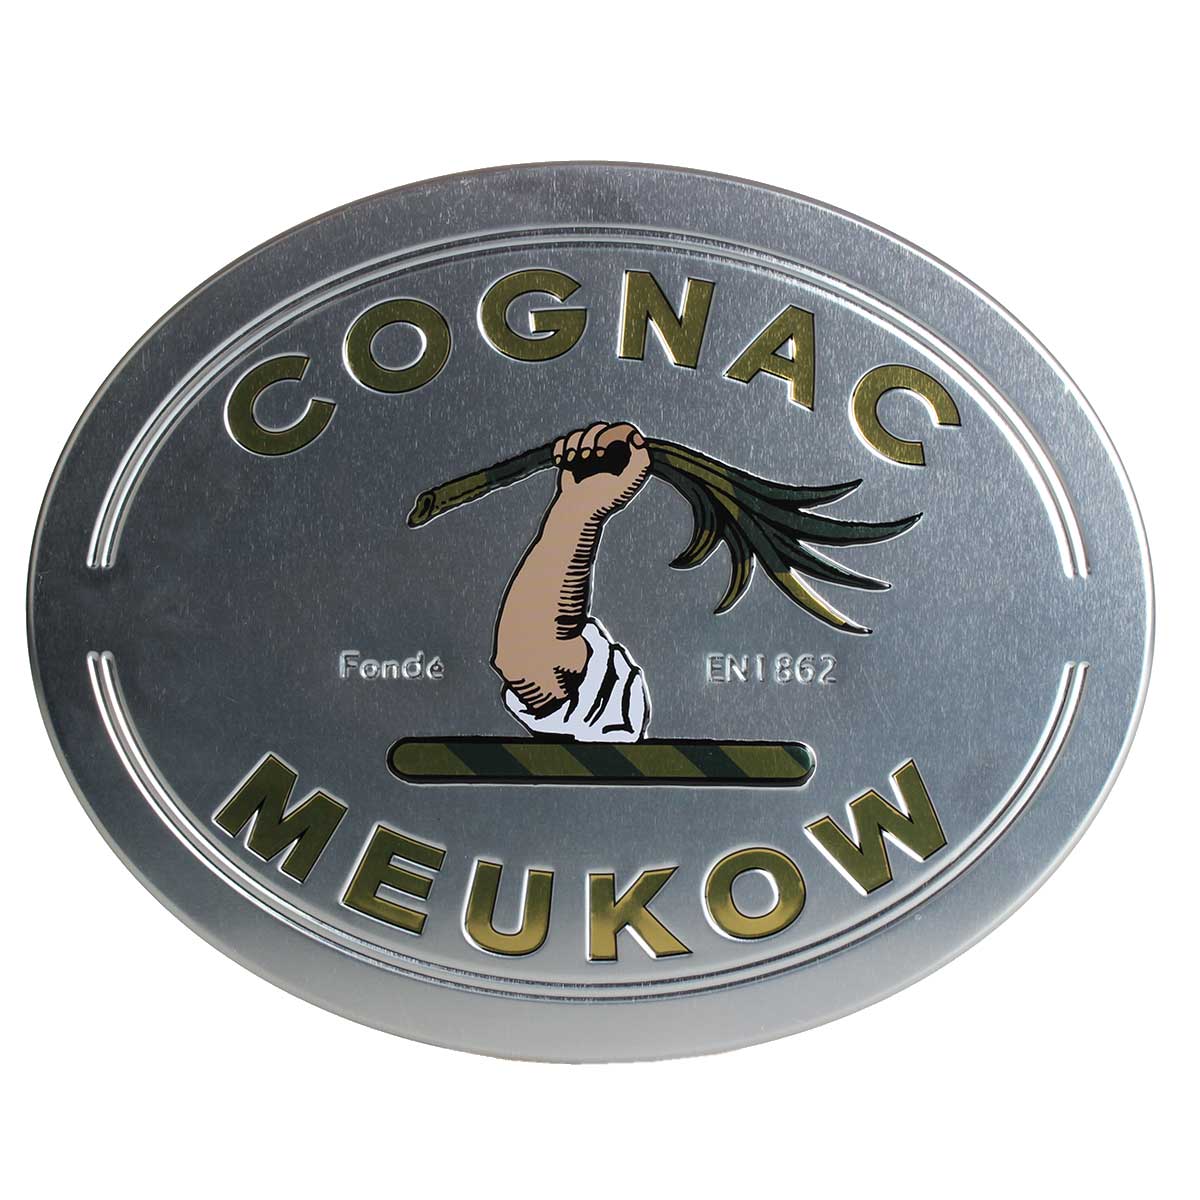 Meukow Geschenkbox Miniaturen 40% vol. 3 x 0,05l